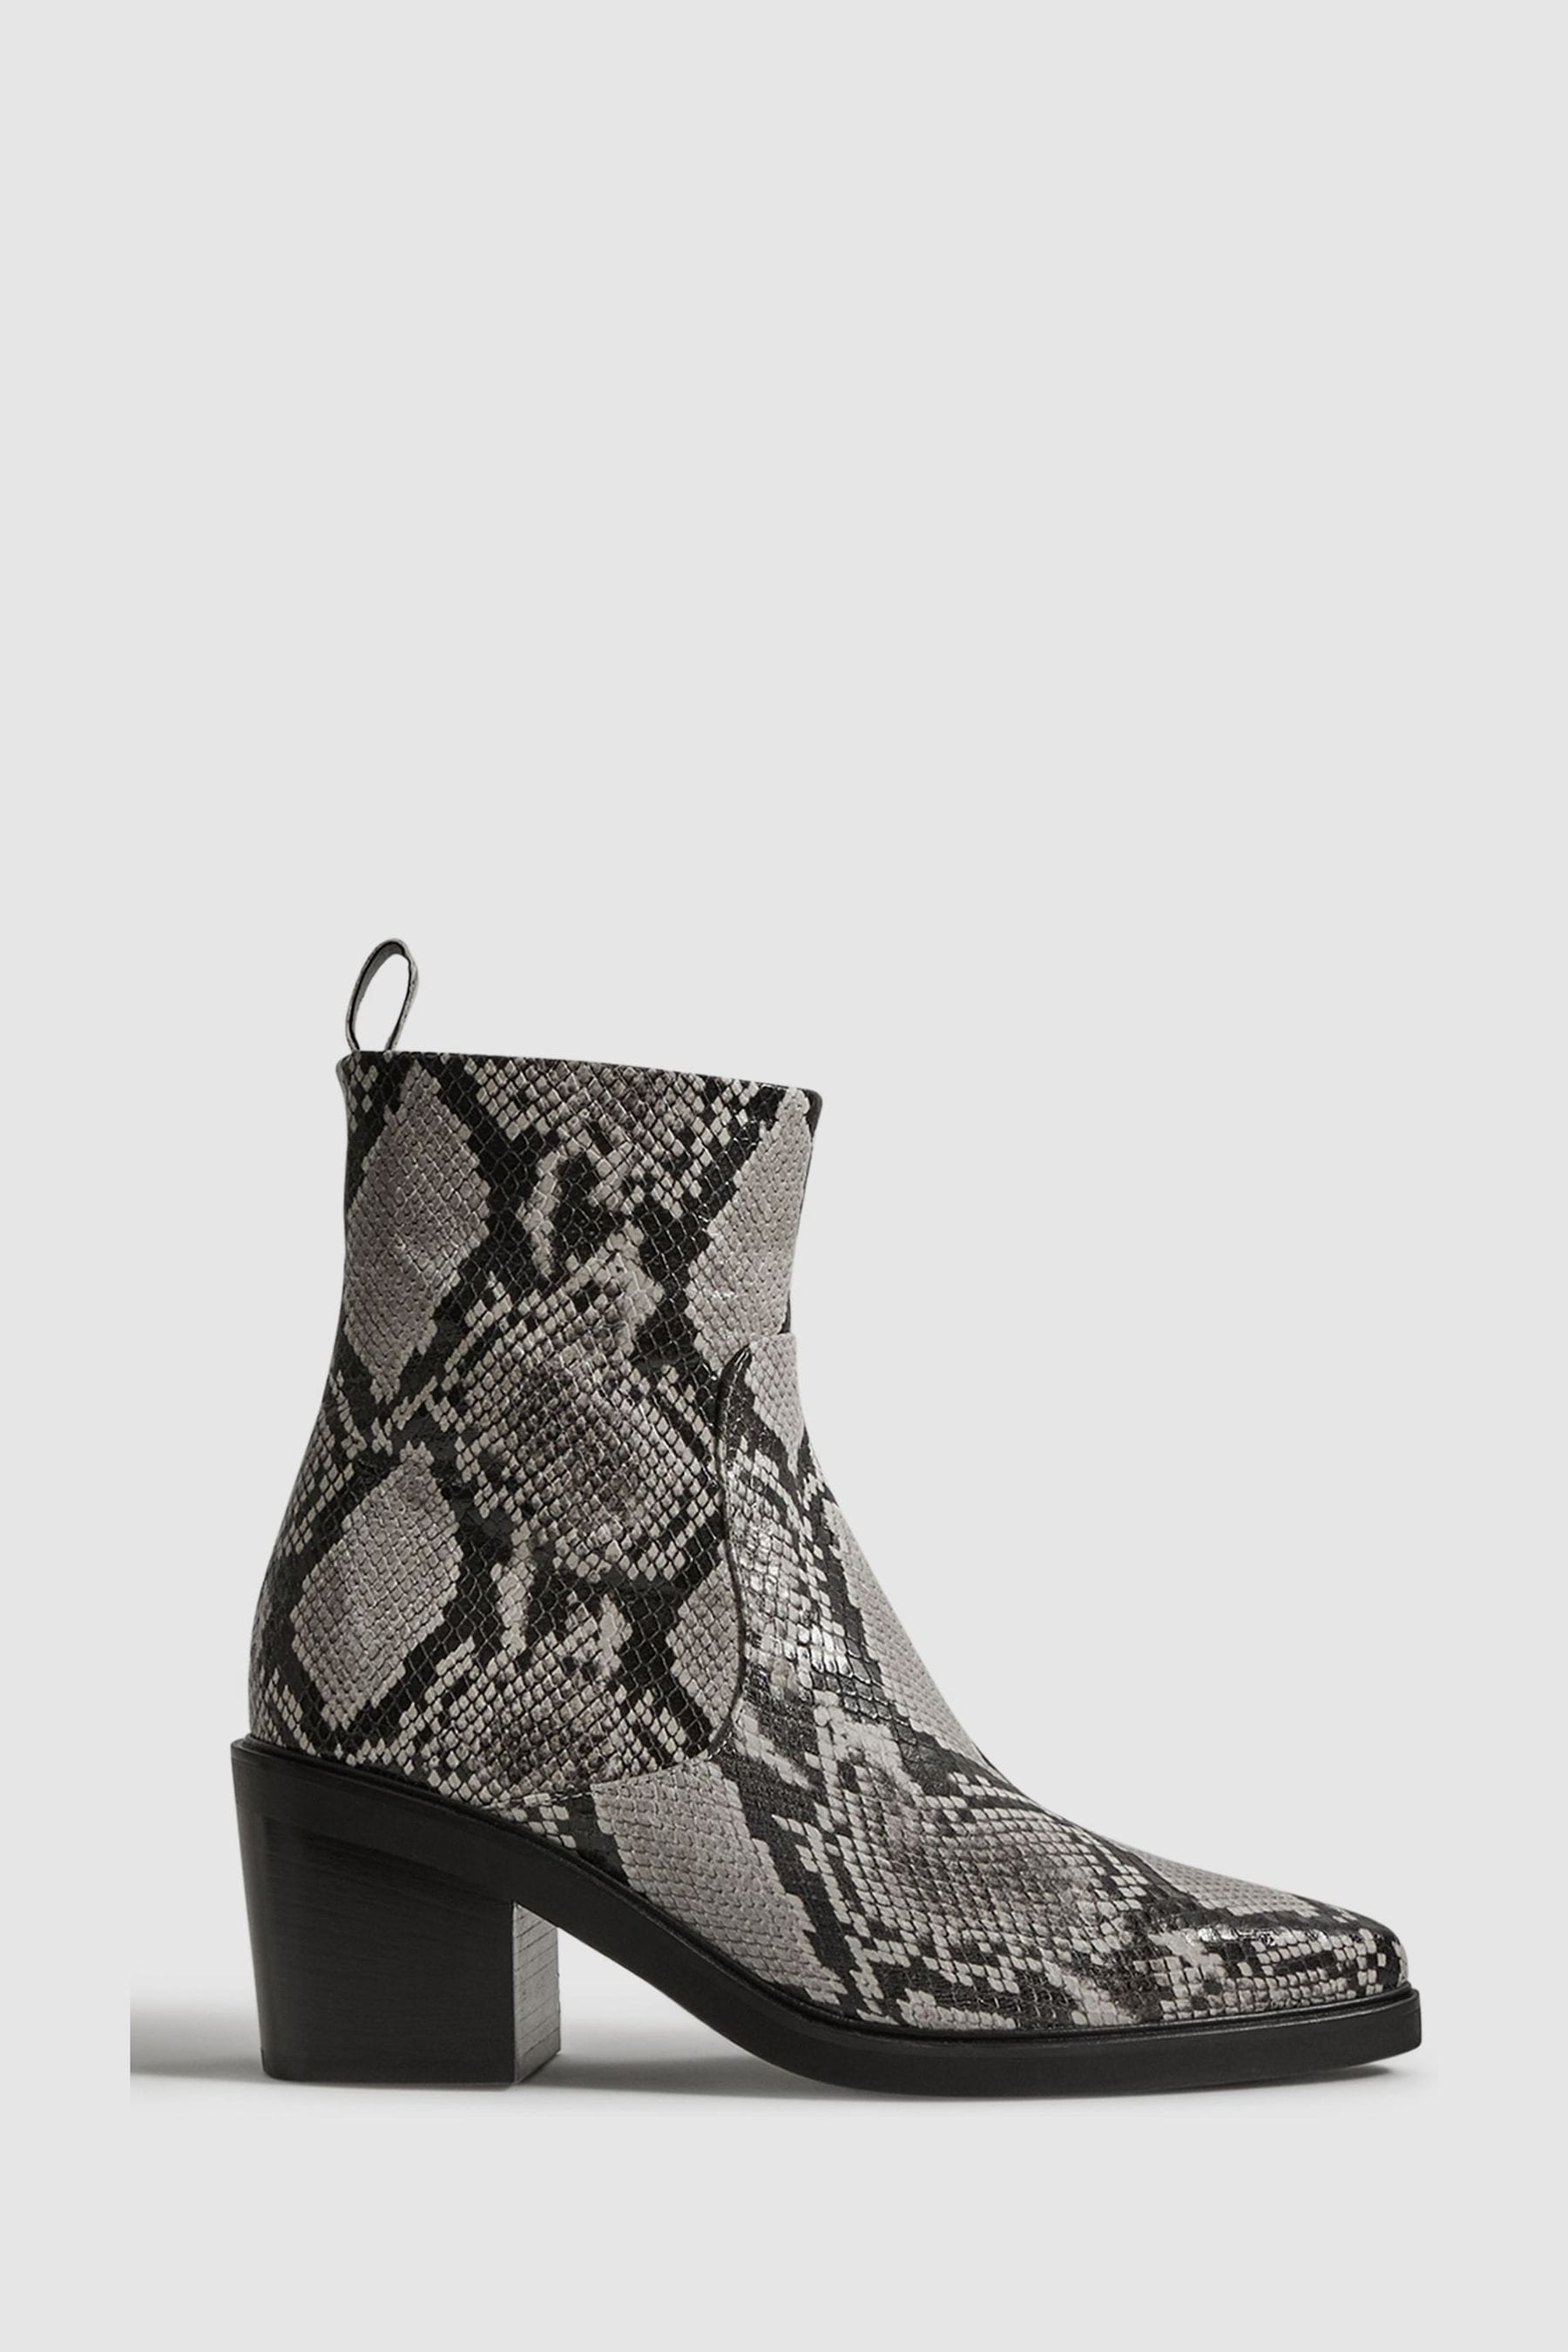 Reiss Sienna - Snake Leather Heeled Western Boots, Uk 6 Eu 39